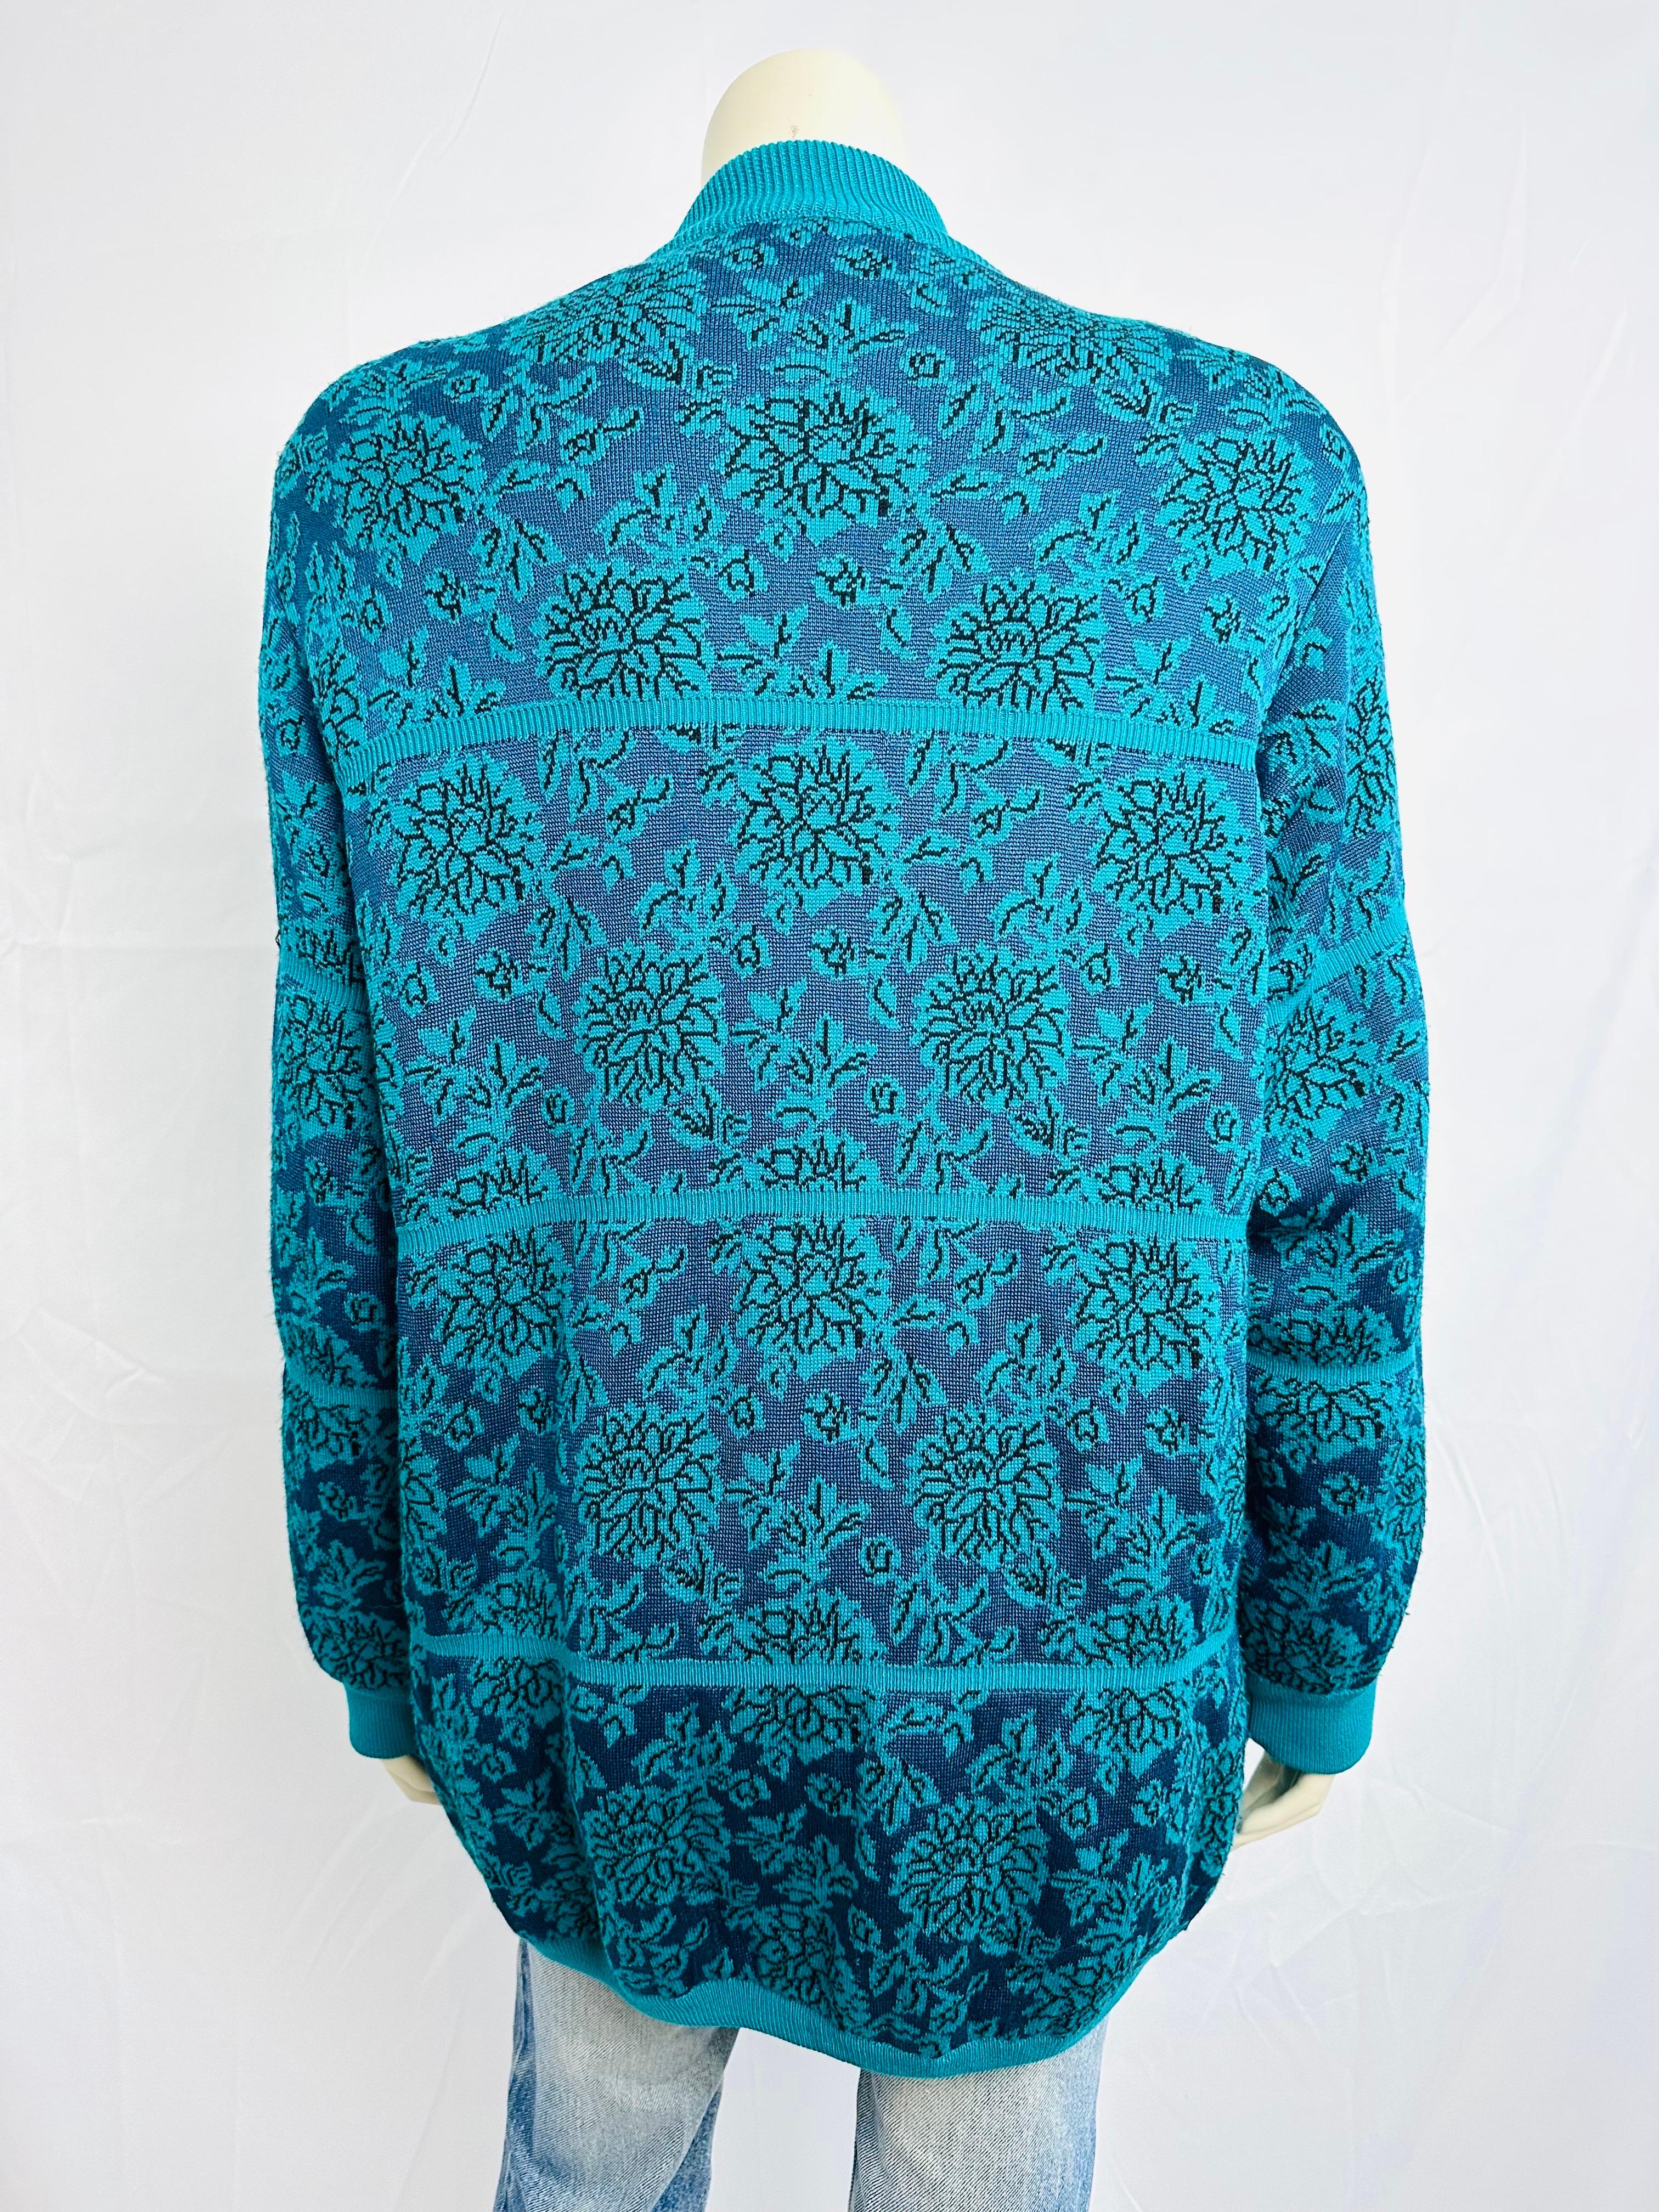 YSL yves saint Laurent 1980s wool coat jacket For Sale 2